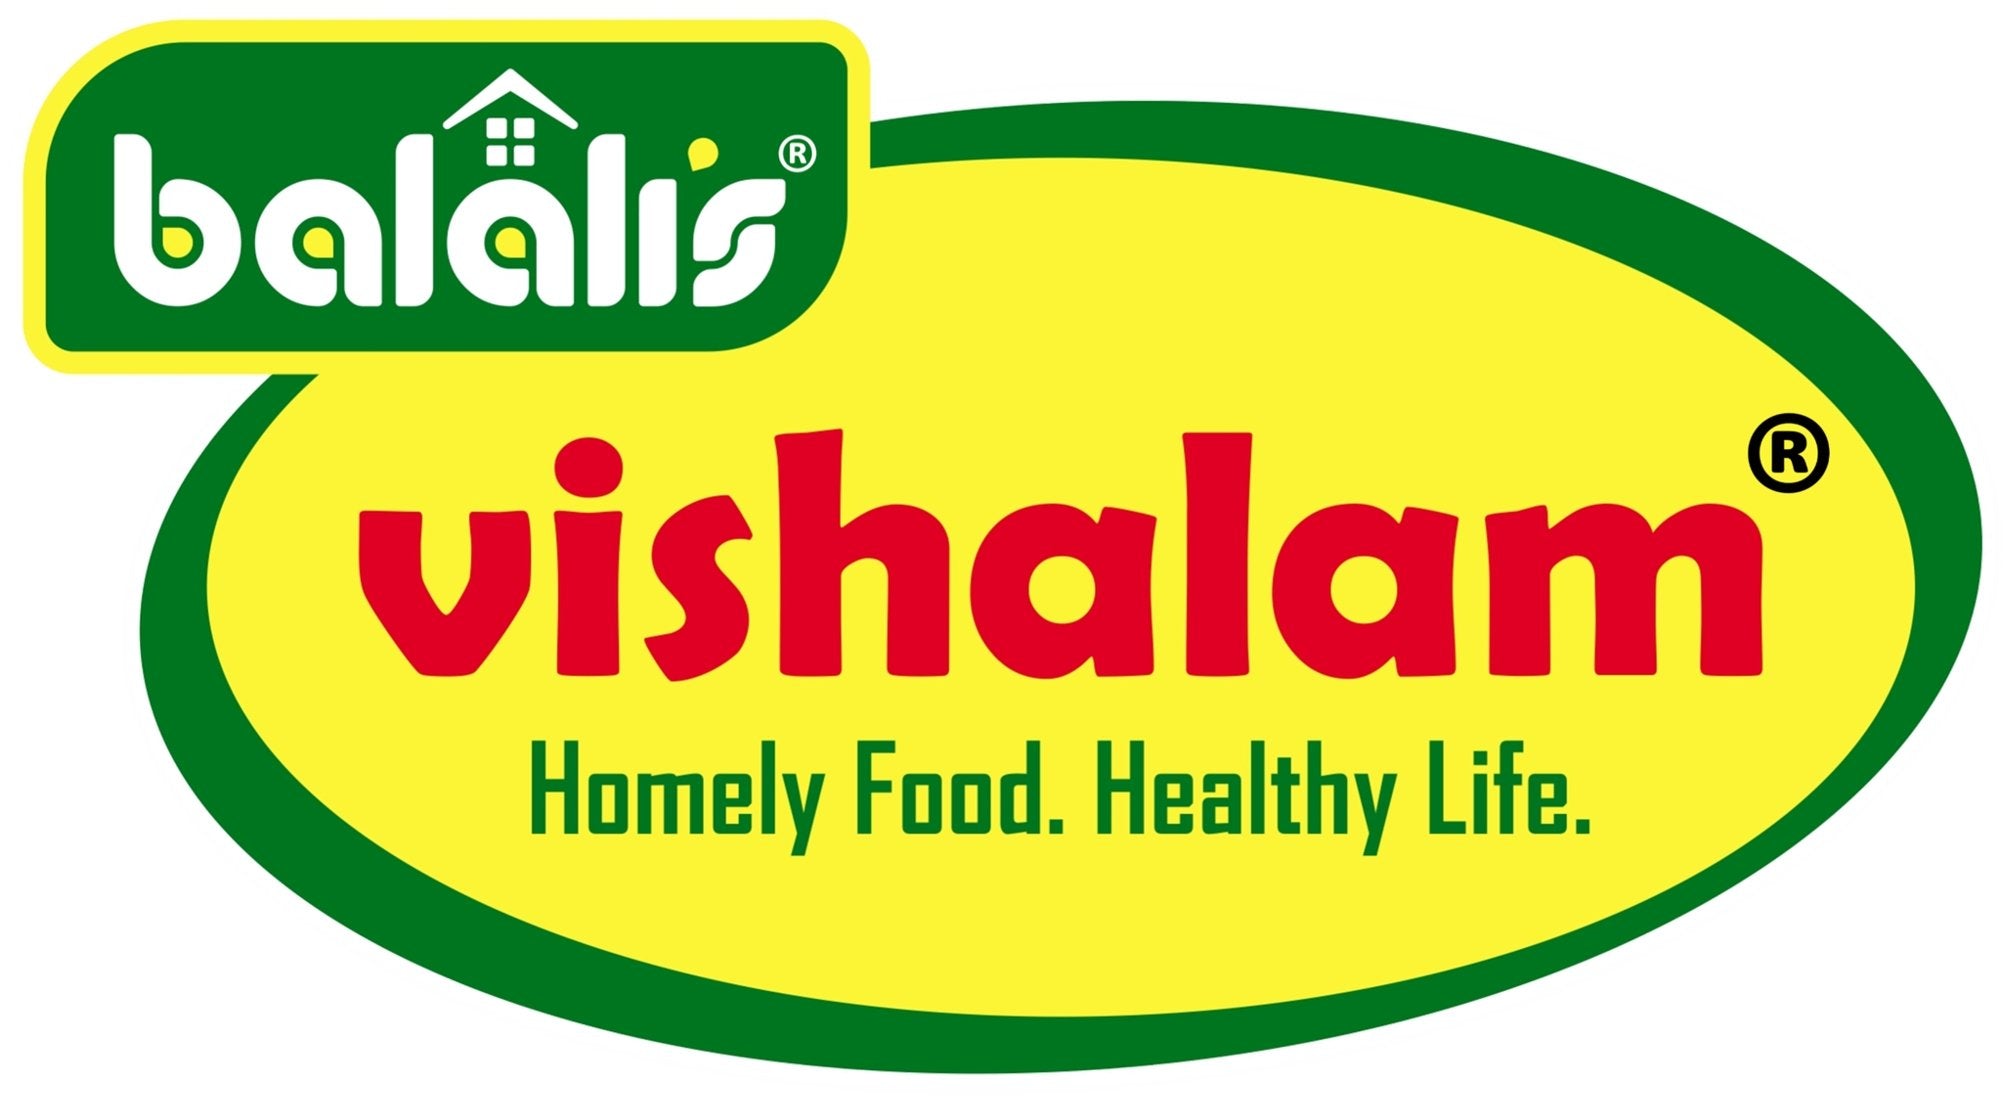 Product Catalog - Balali's Vishalam